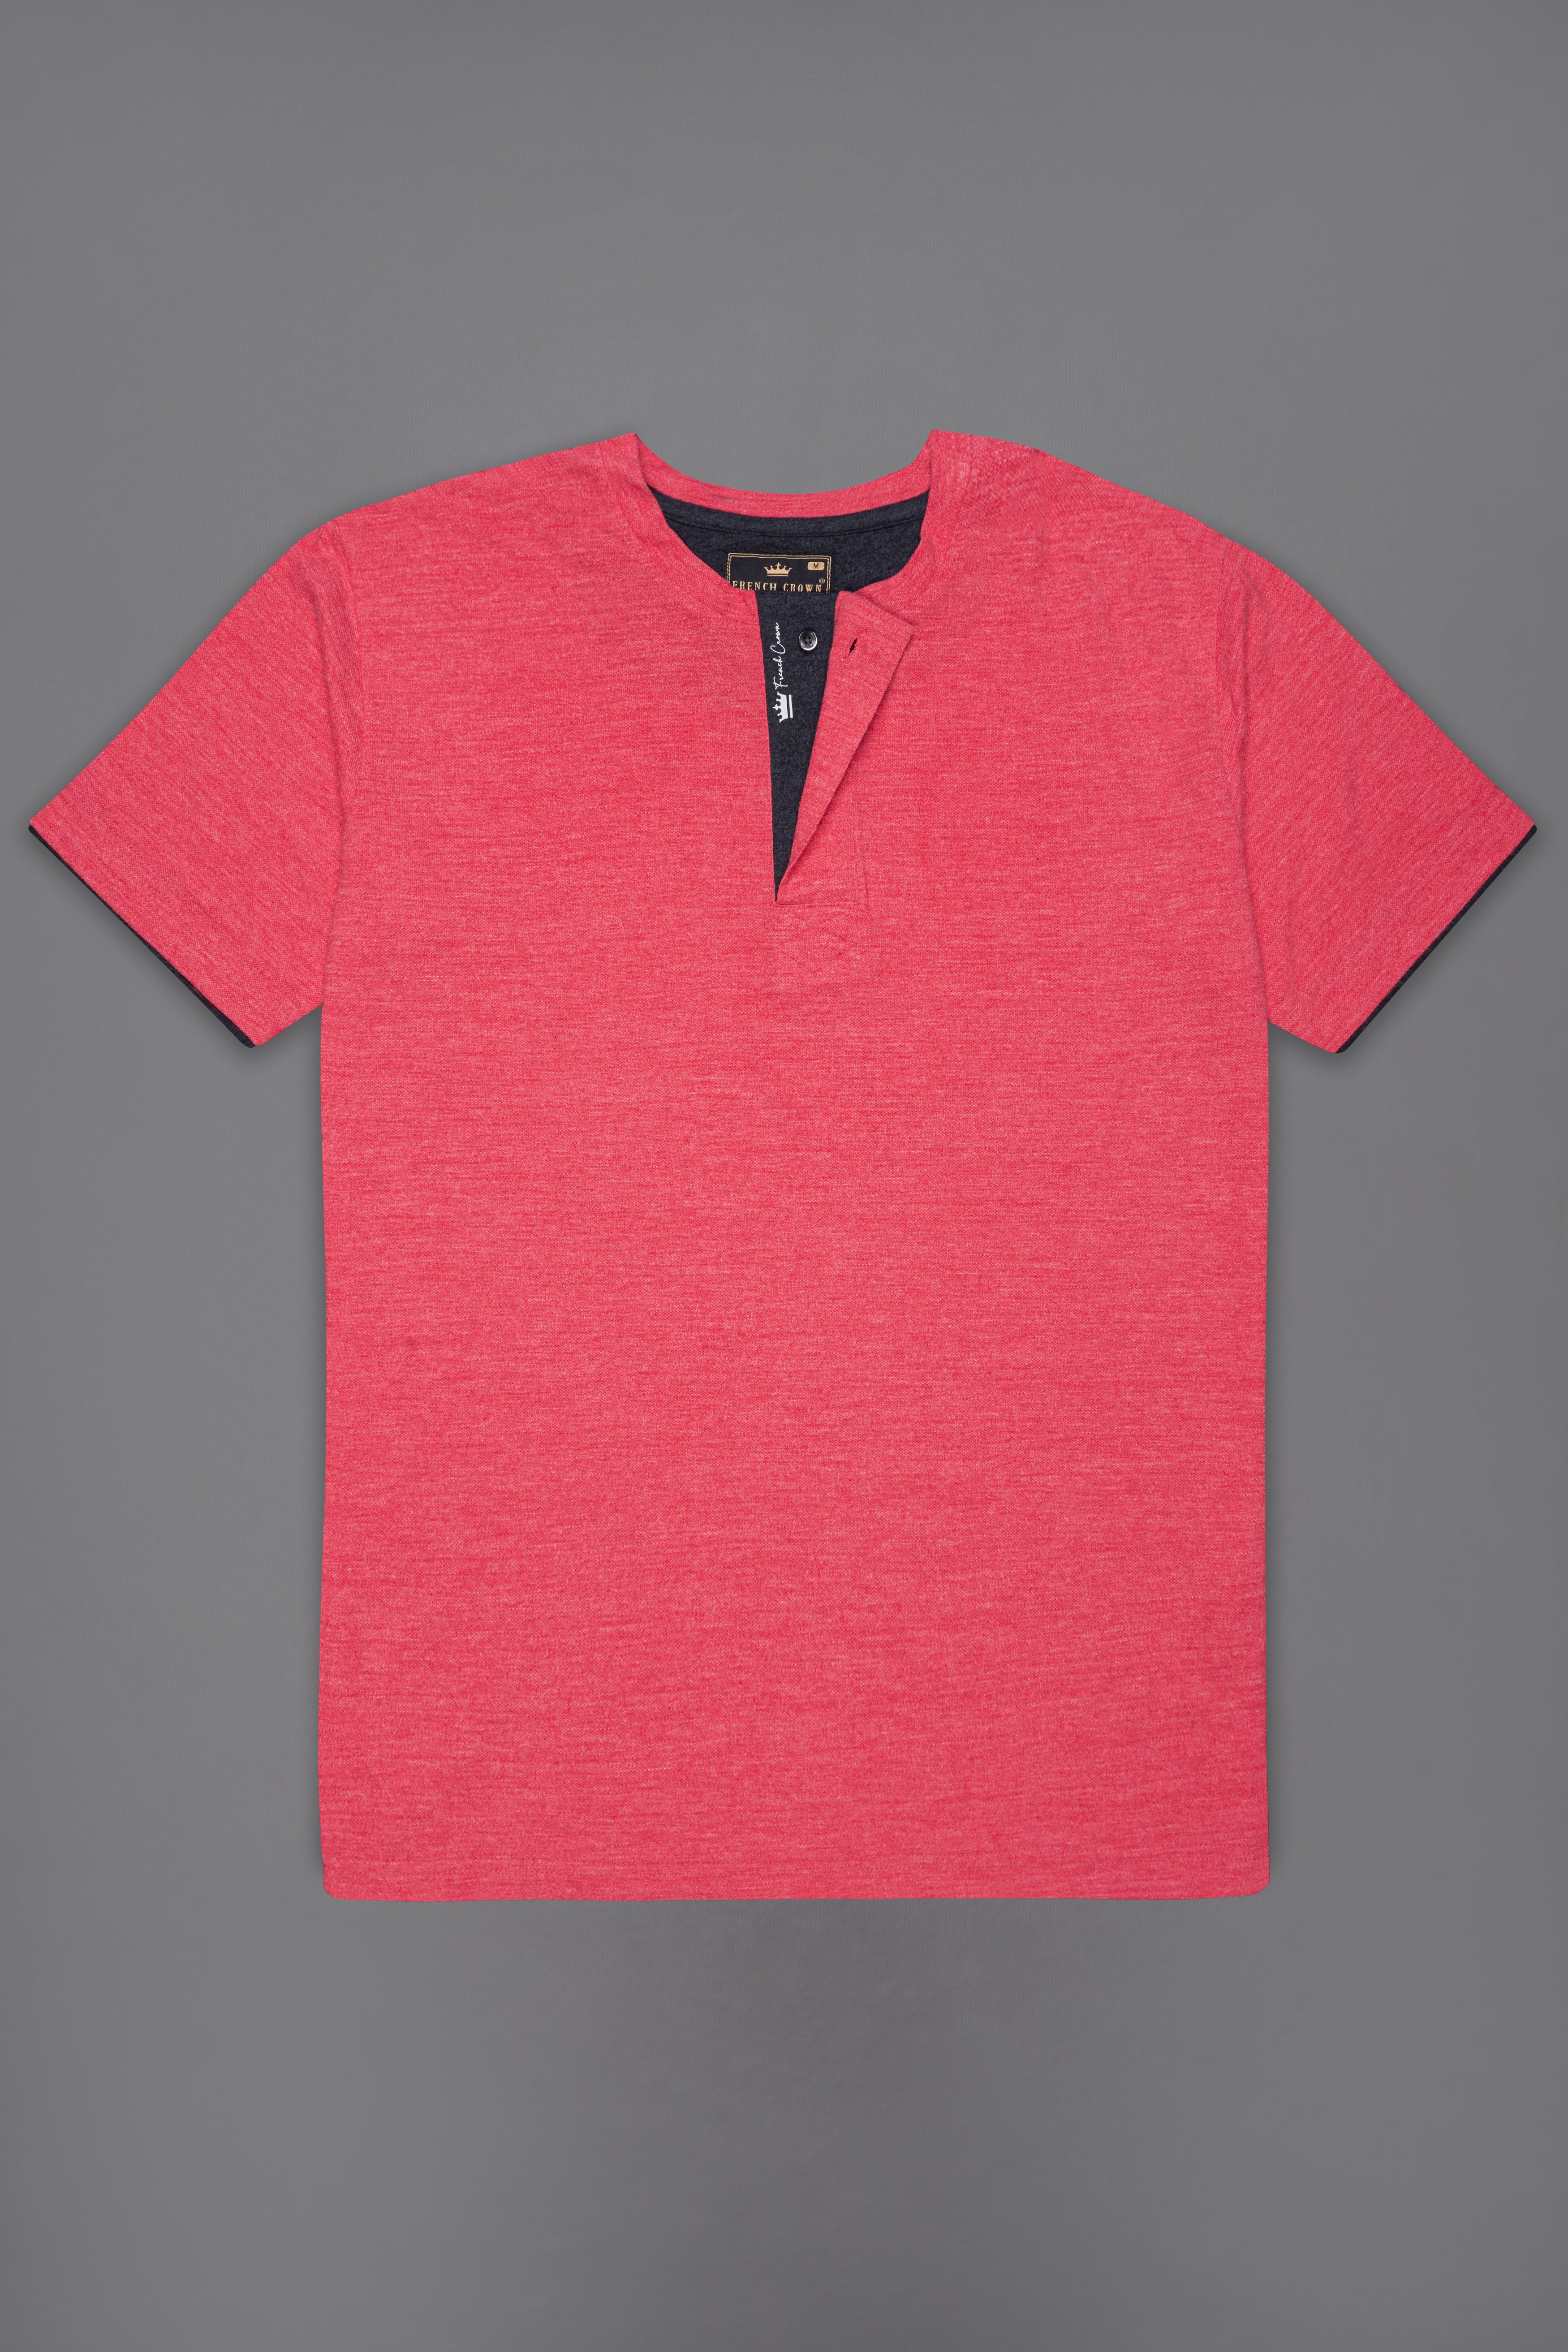 Cranberry Red Premium Cotton Round Neck Pique T-Shirt TS900-S, TS900-M, TS900-L, TS900-XL, TS900-XXL